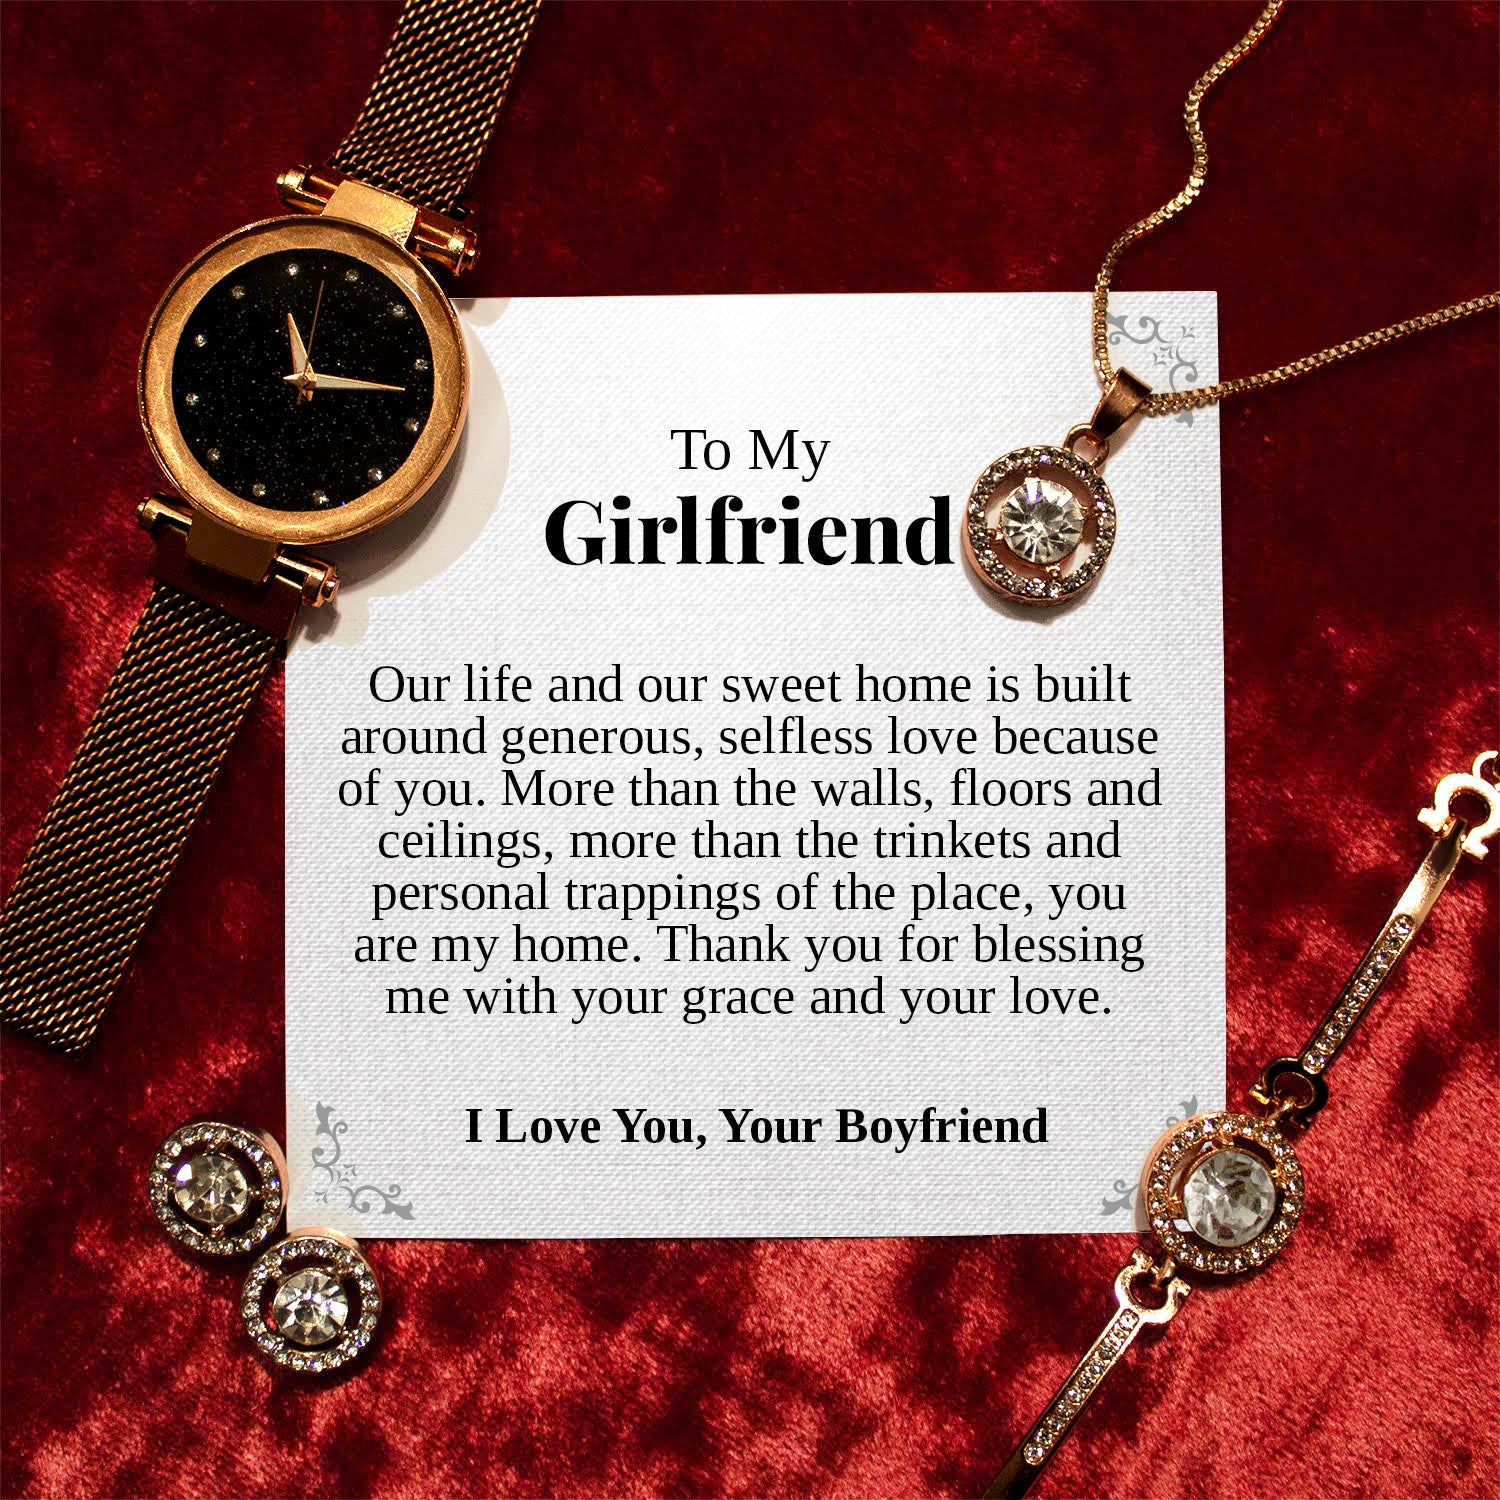 To My Girlfriend | “My Home” | Cosmopolitan Set